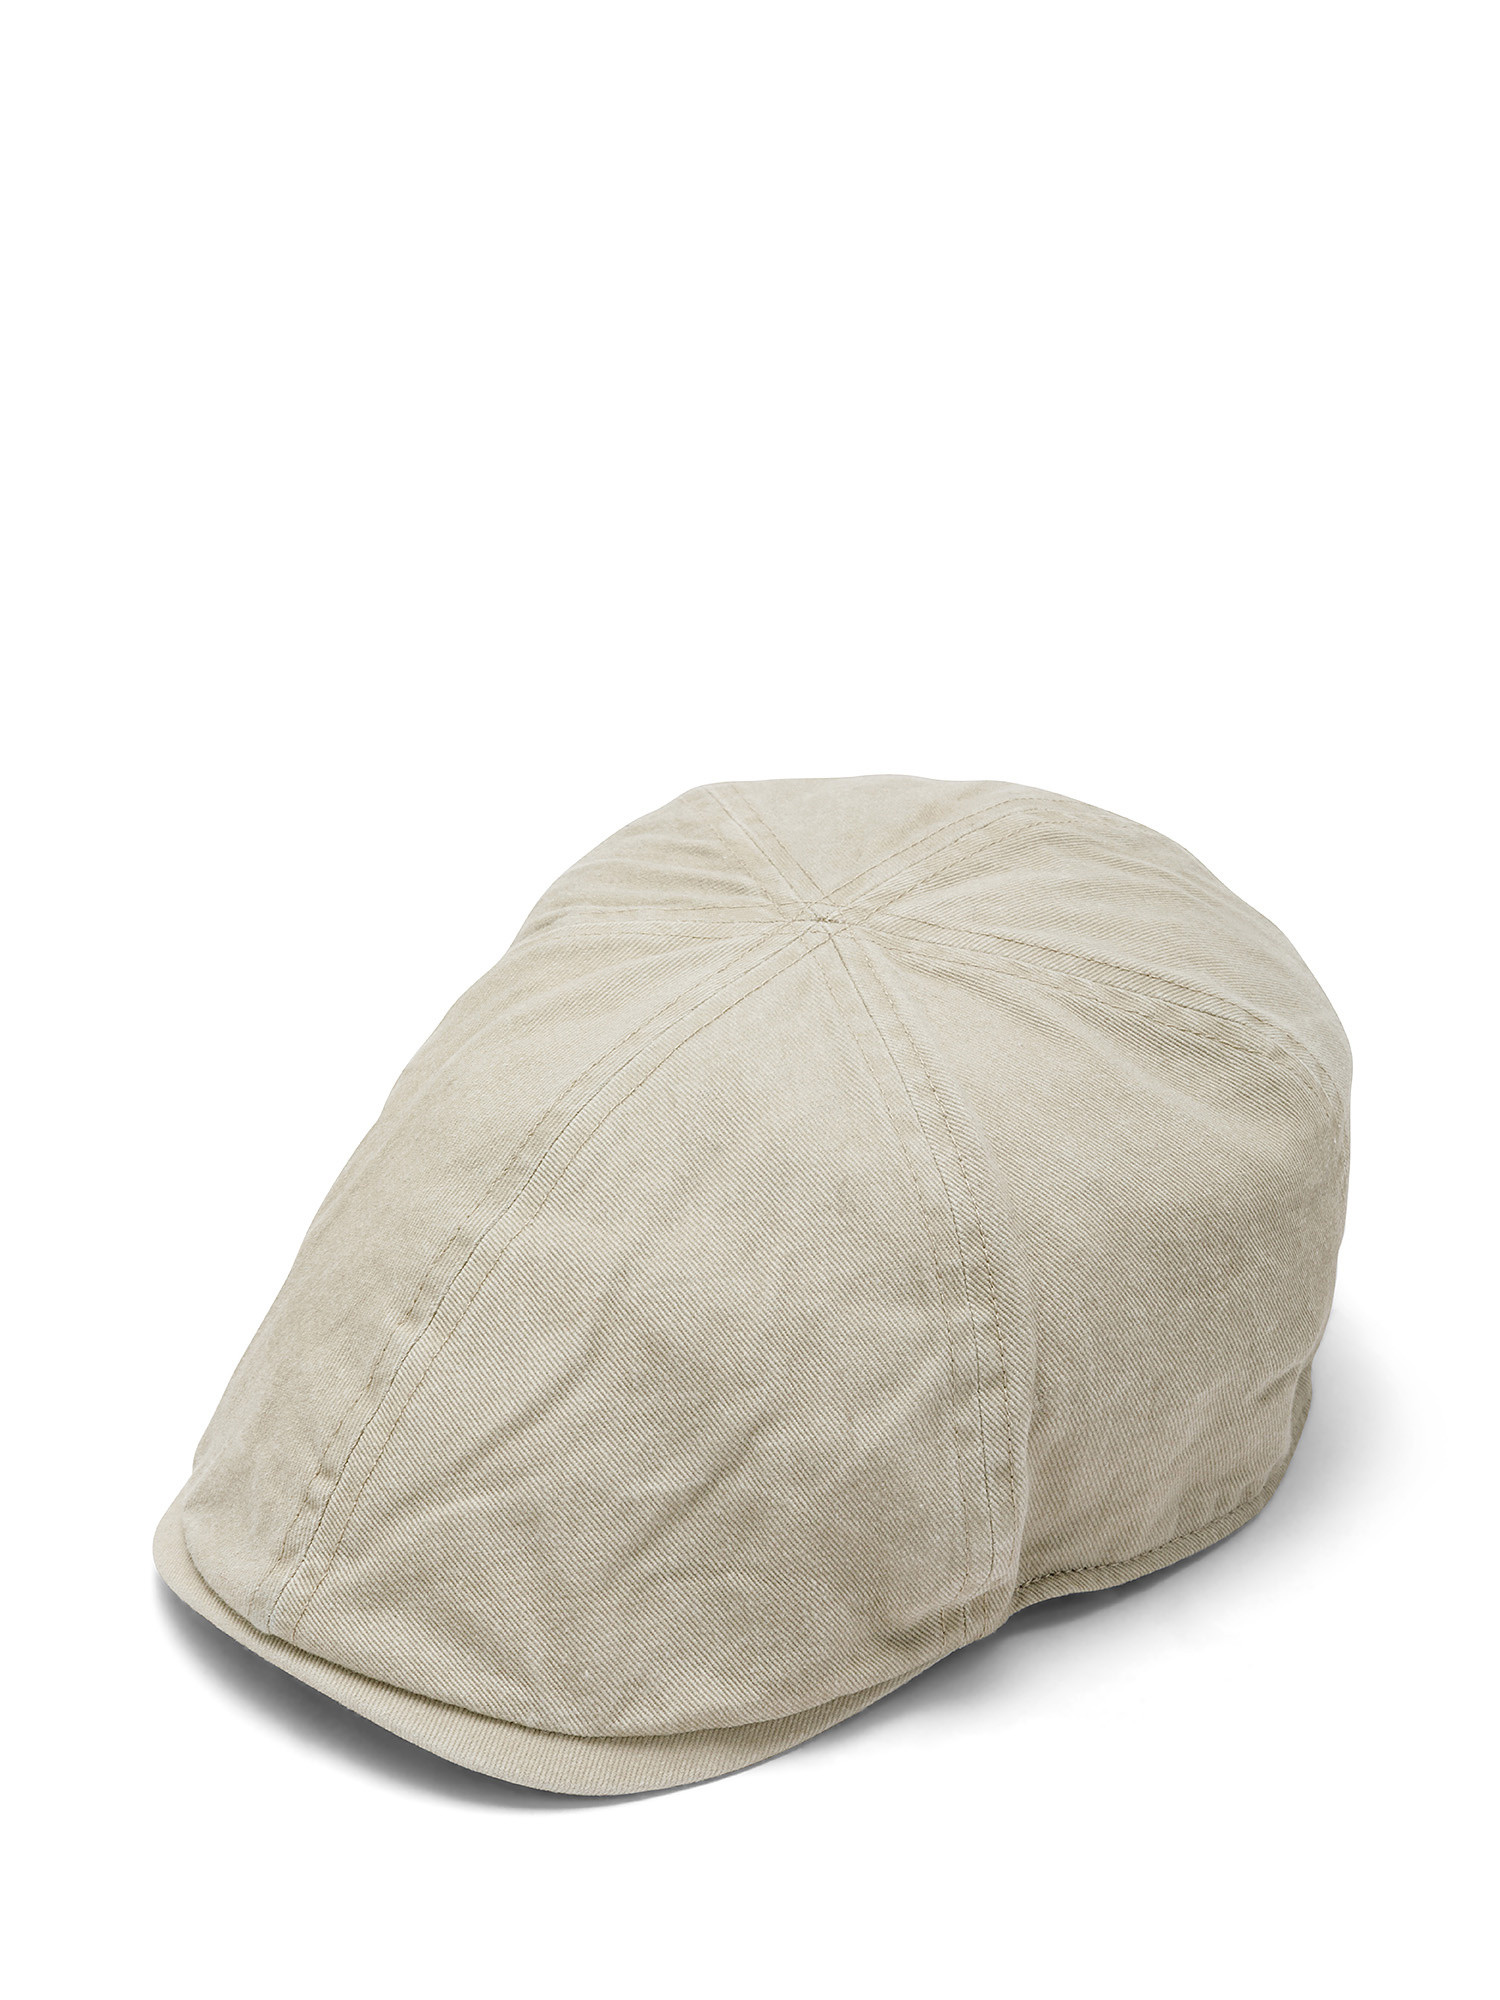 Luca D'Altieri - Cotton cap, Beige, large image number 0